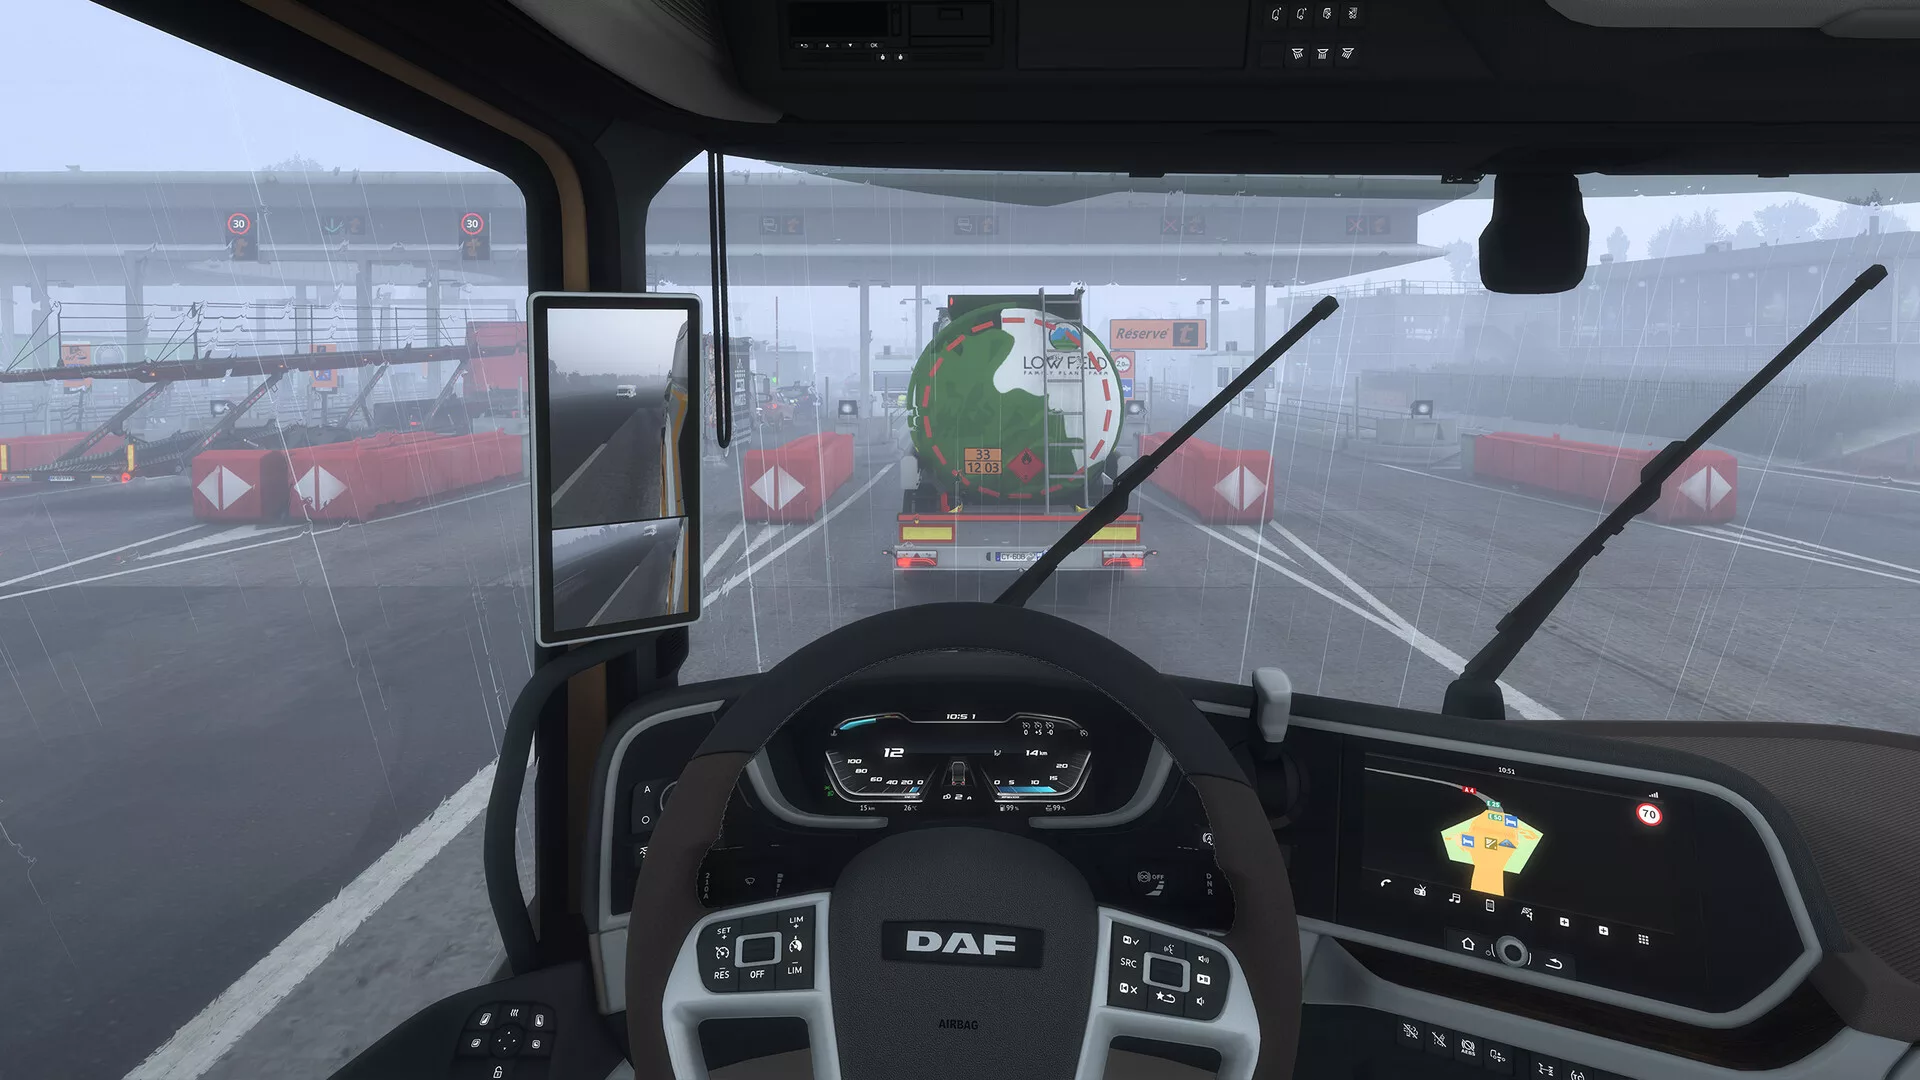 Euro Truck Simulator 2 Torrent